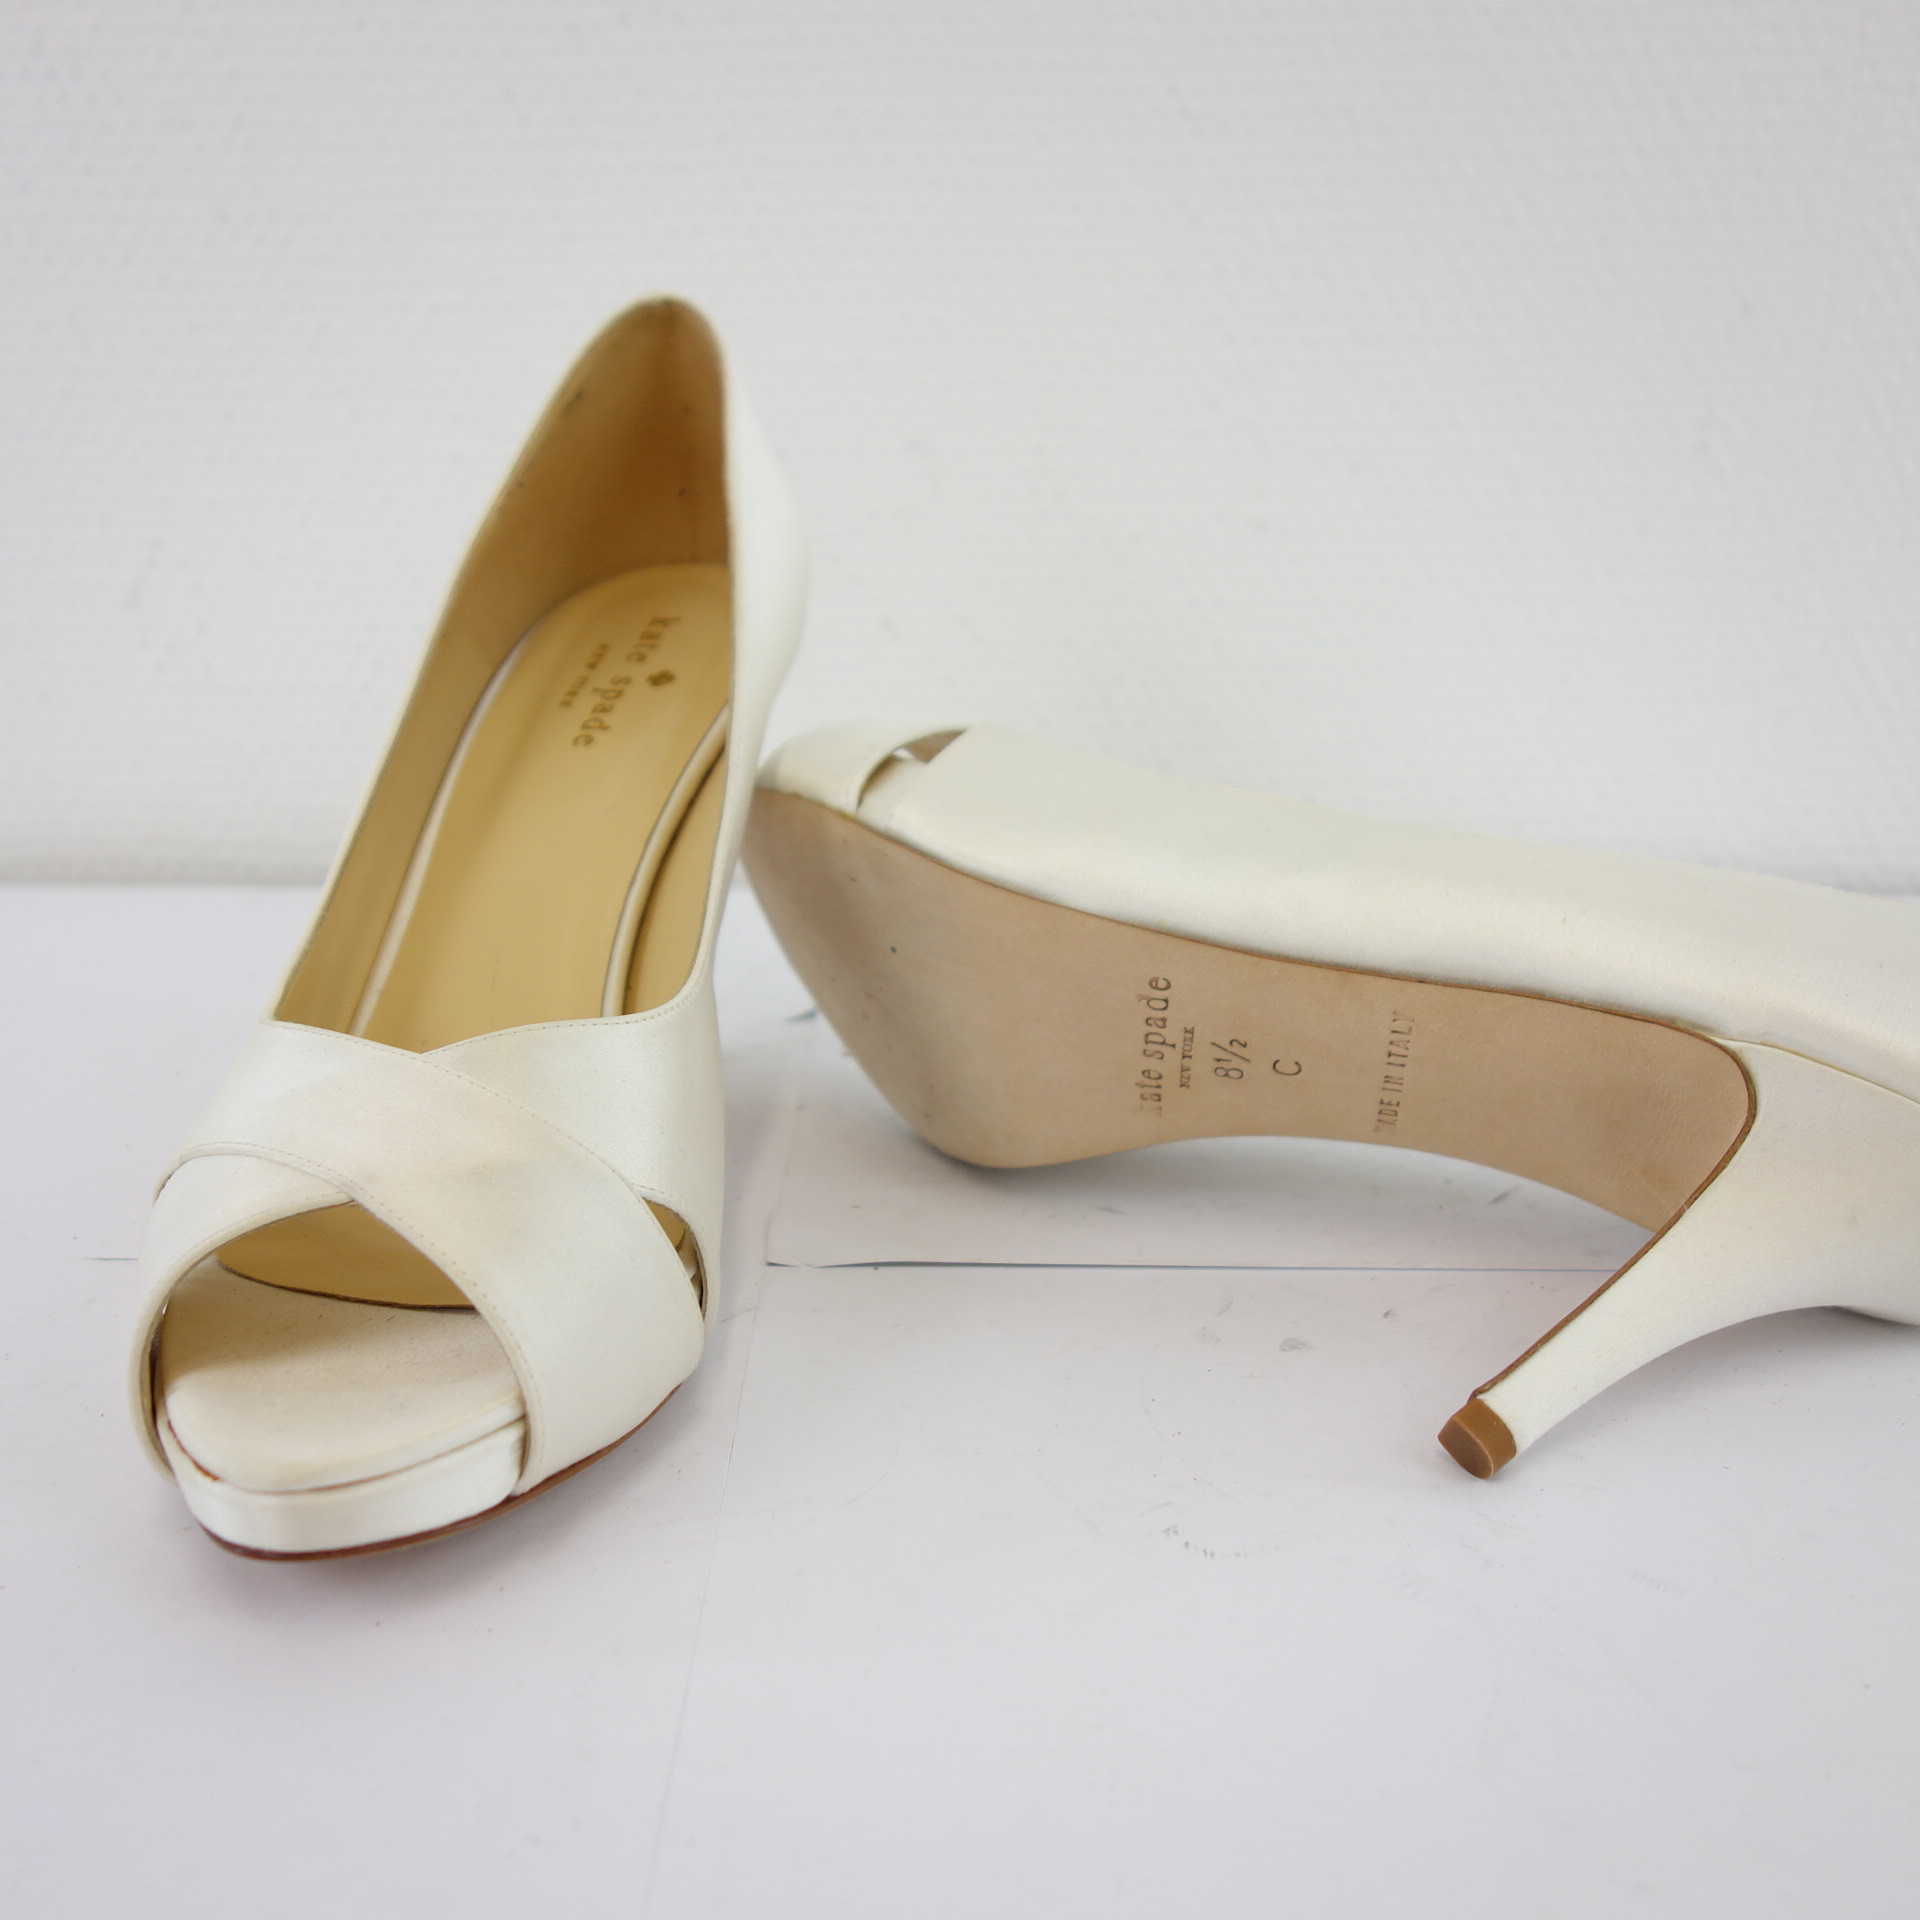 KATE SPADE New York Damen Schuhe Damenschuhe Satin Creme Peeptoe Modell BILLIE Größe 37,5